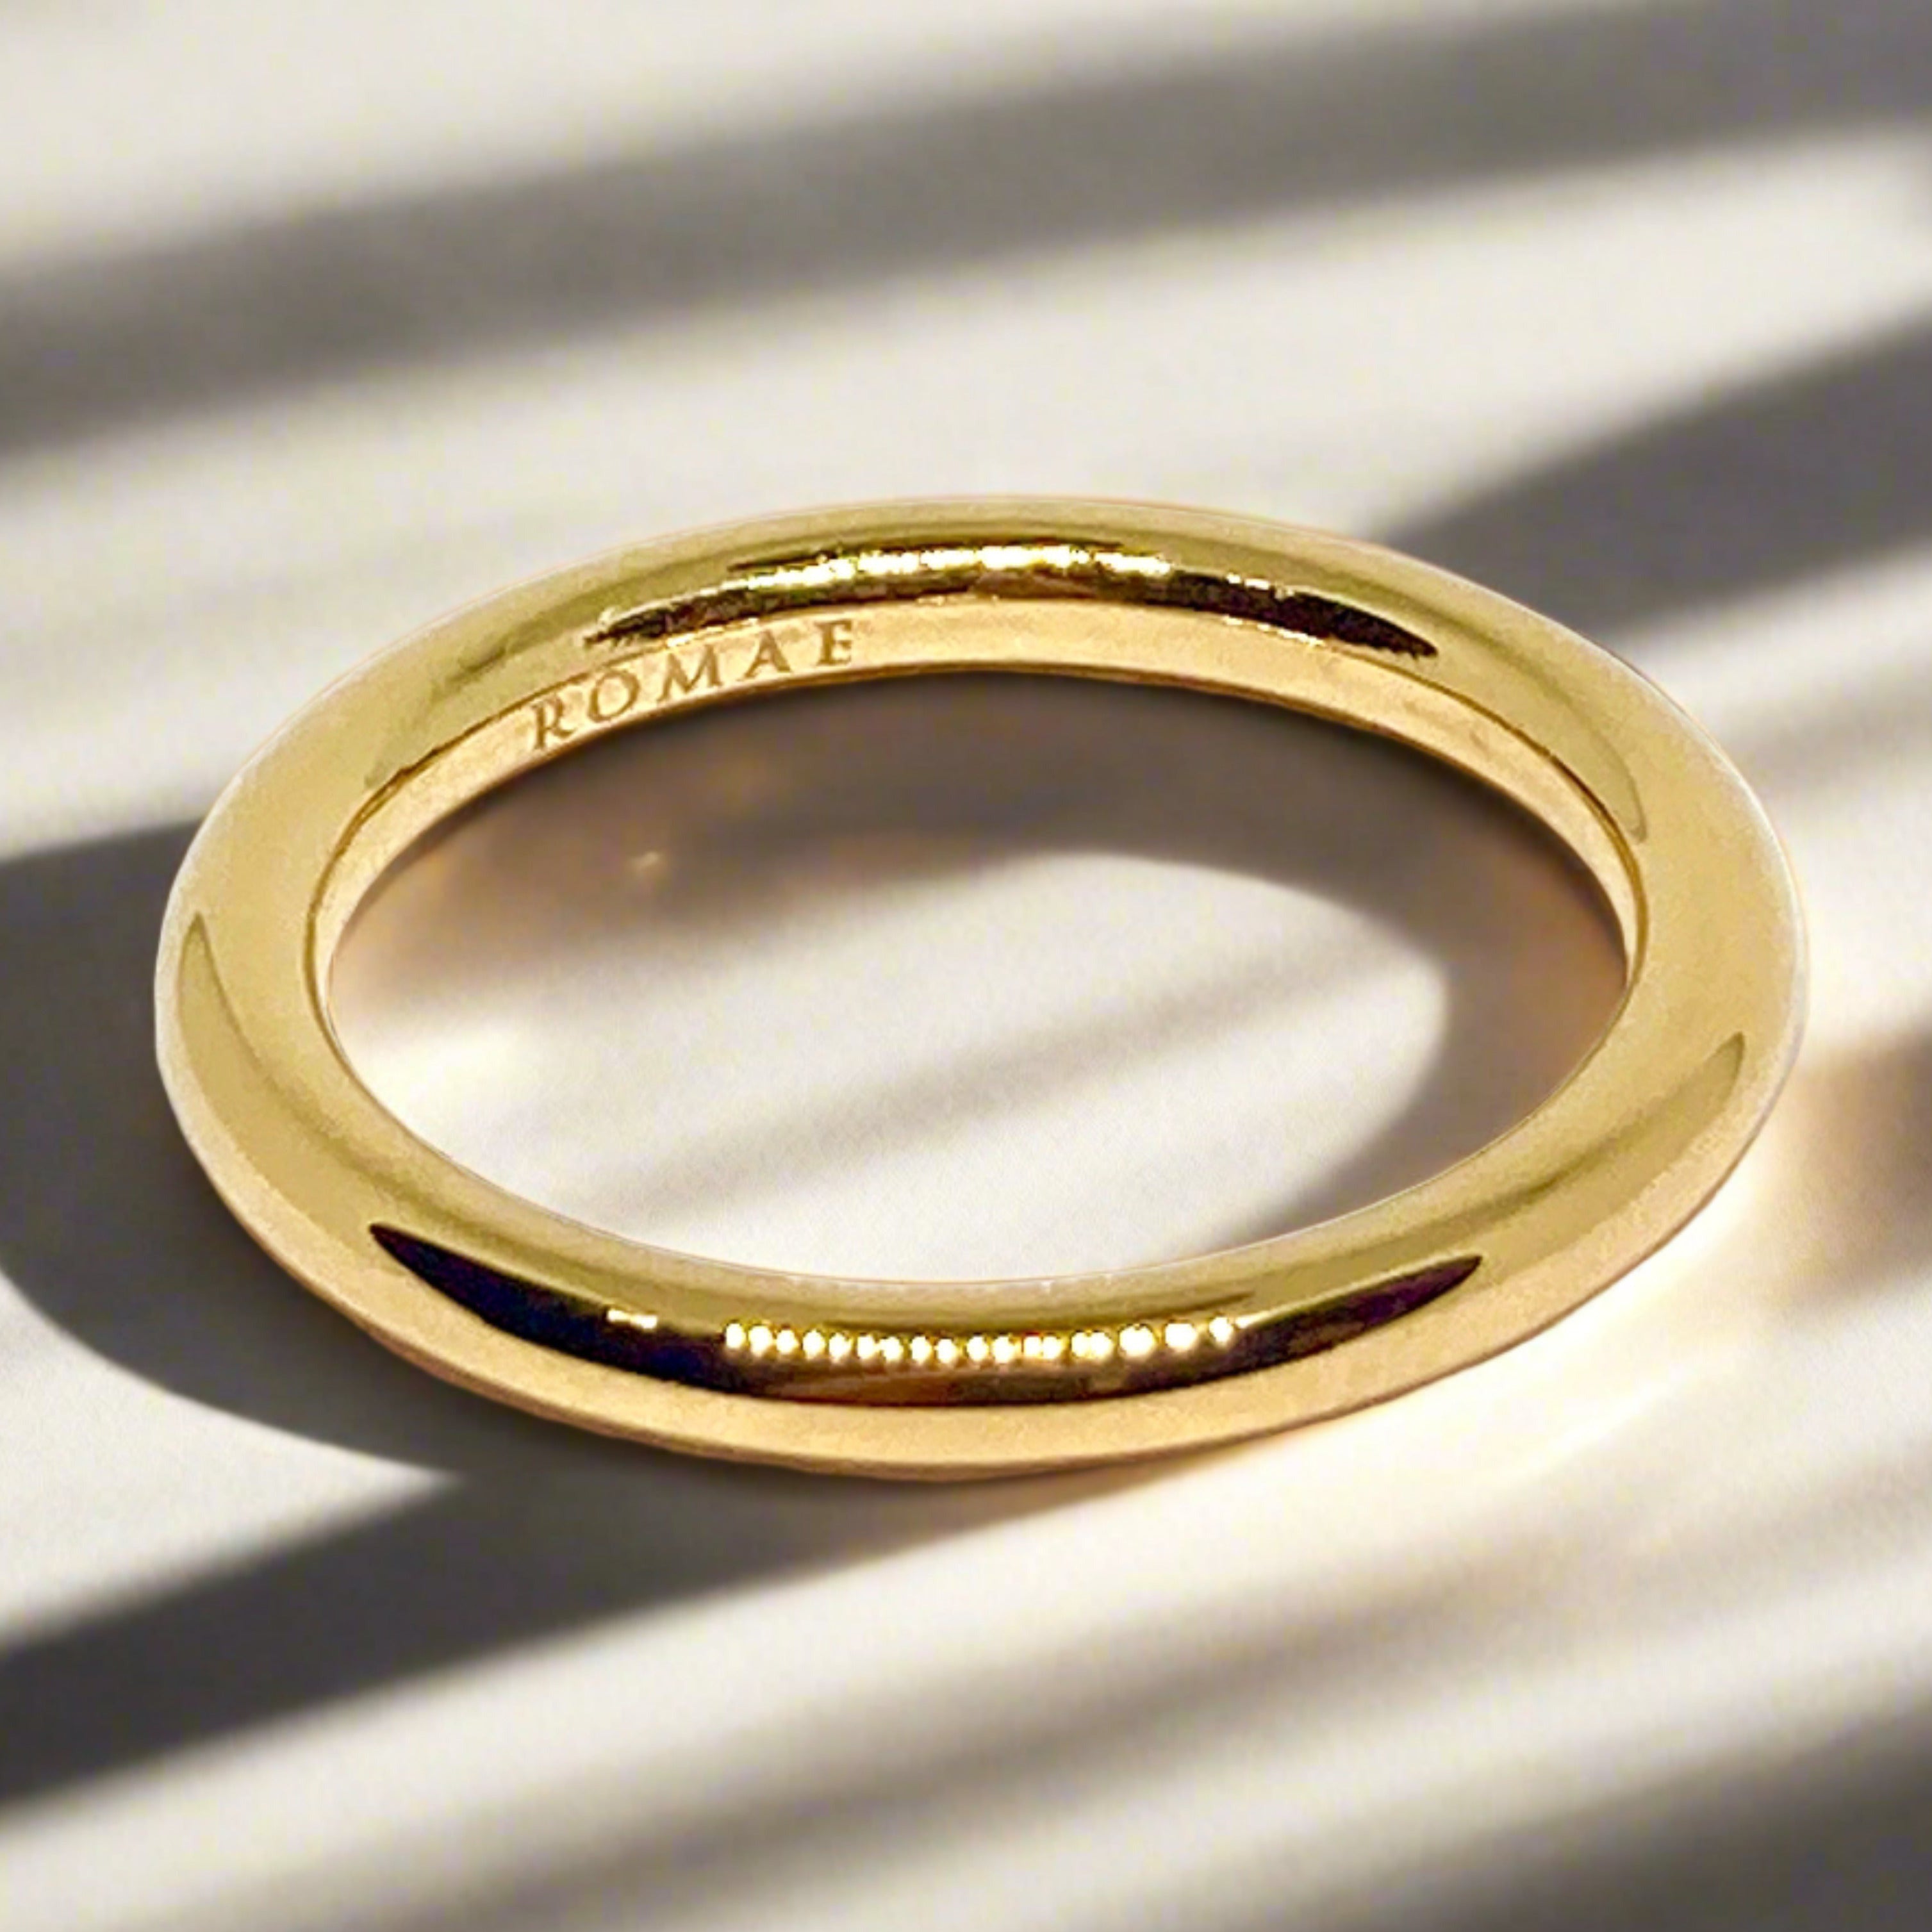 24k gold rings designed for gentlemen who appreciate fine craftsmanship.  Inspired by 15th-century artisans, the Palmette Ring boasts intr... |  Instagram